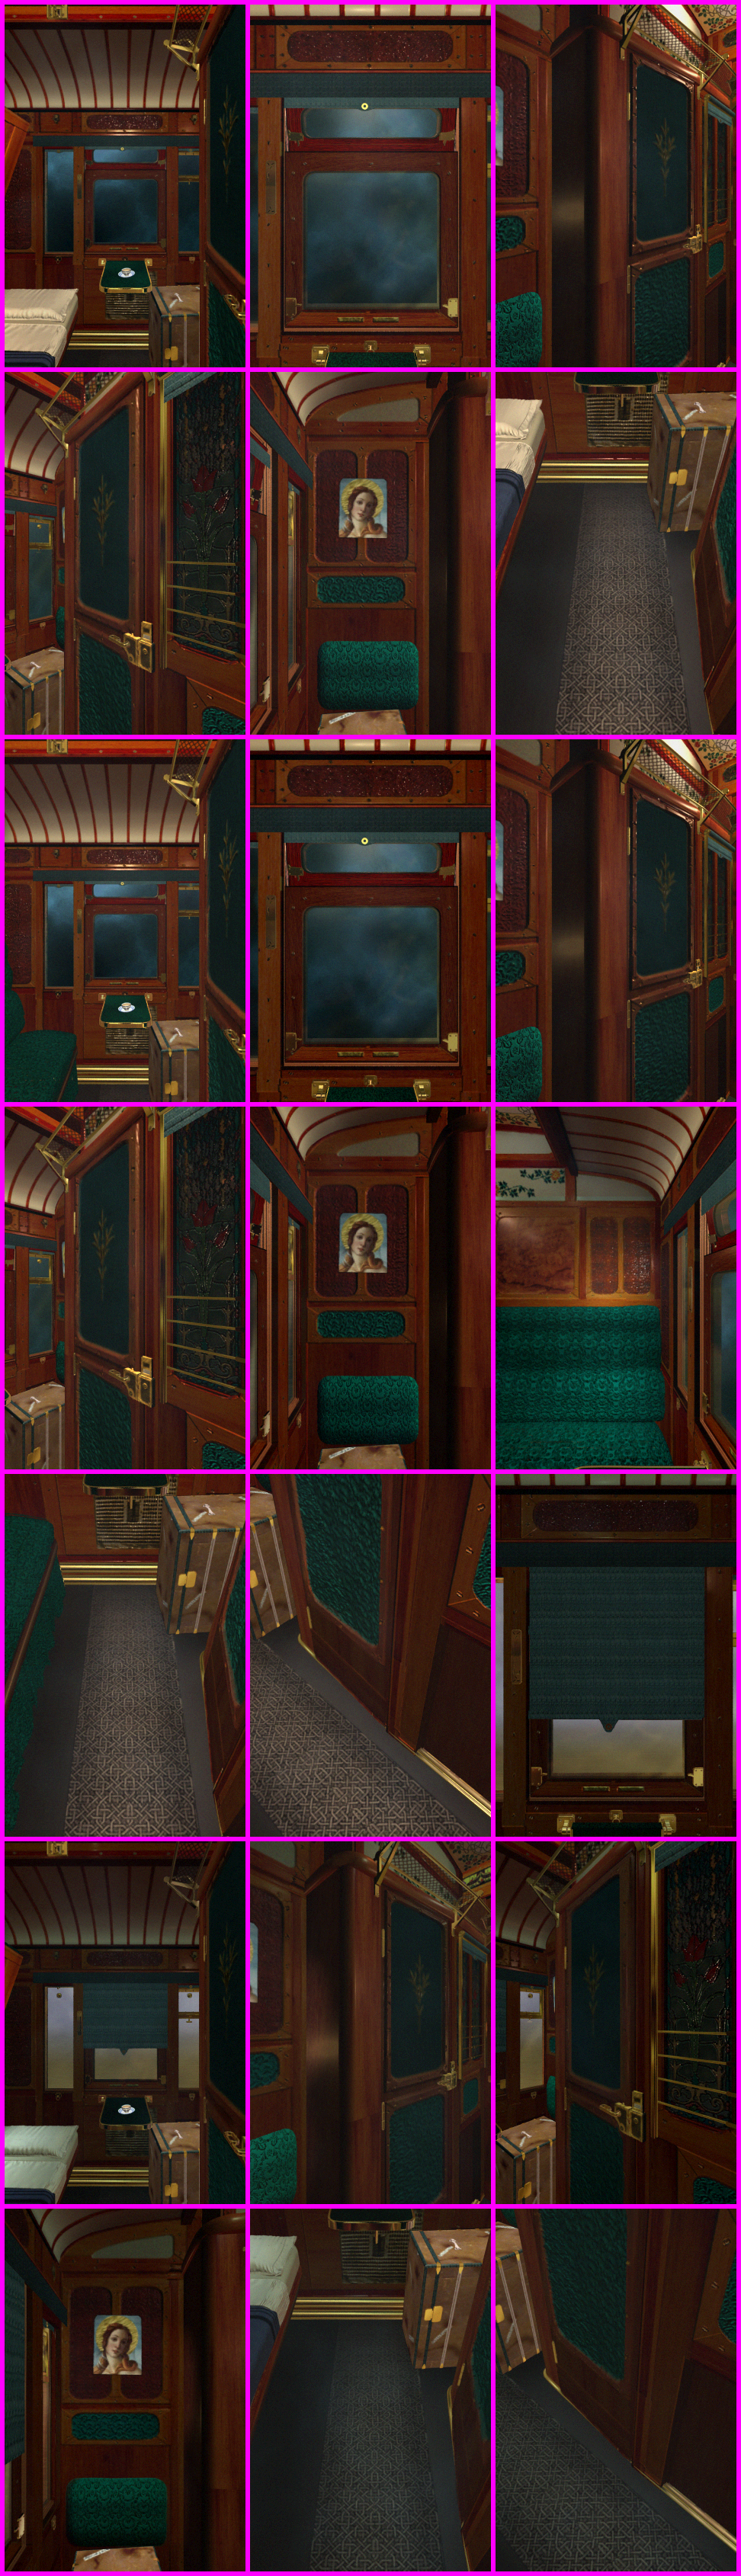 Compartment A